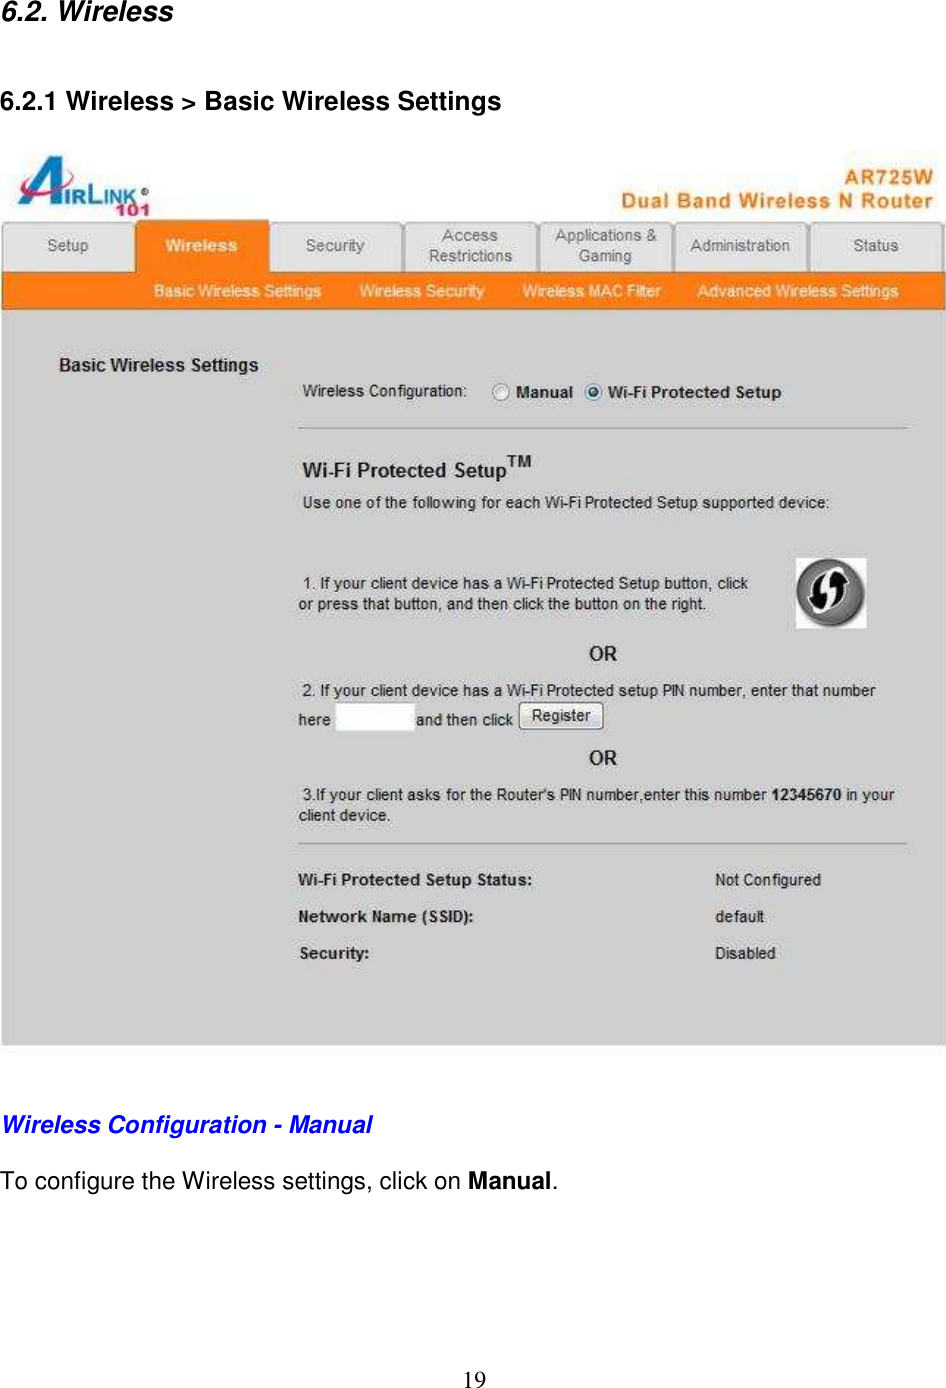 19 6.2. Wireless  6.2.1 Wireless &gt; Basic Wireless Settings     Wireless Configuration - Manual  To configure the Wireless settings, click on Manual.  